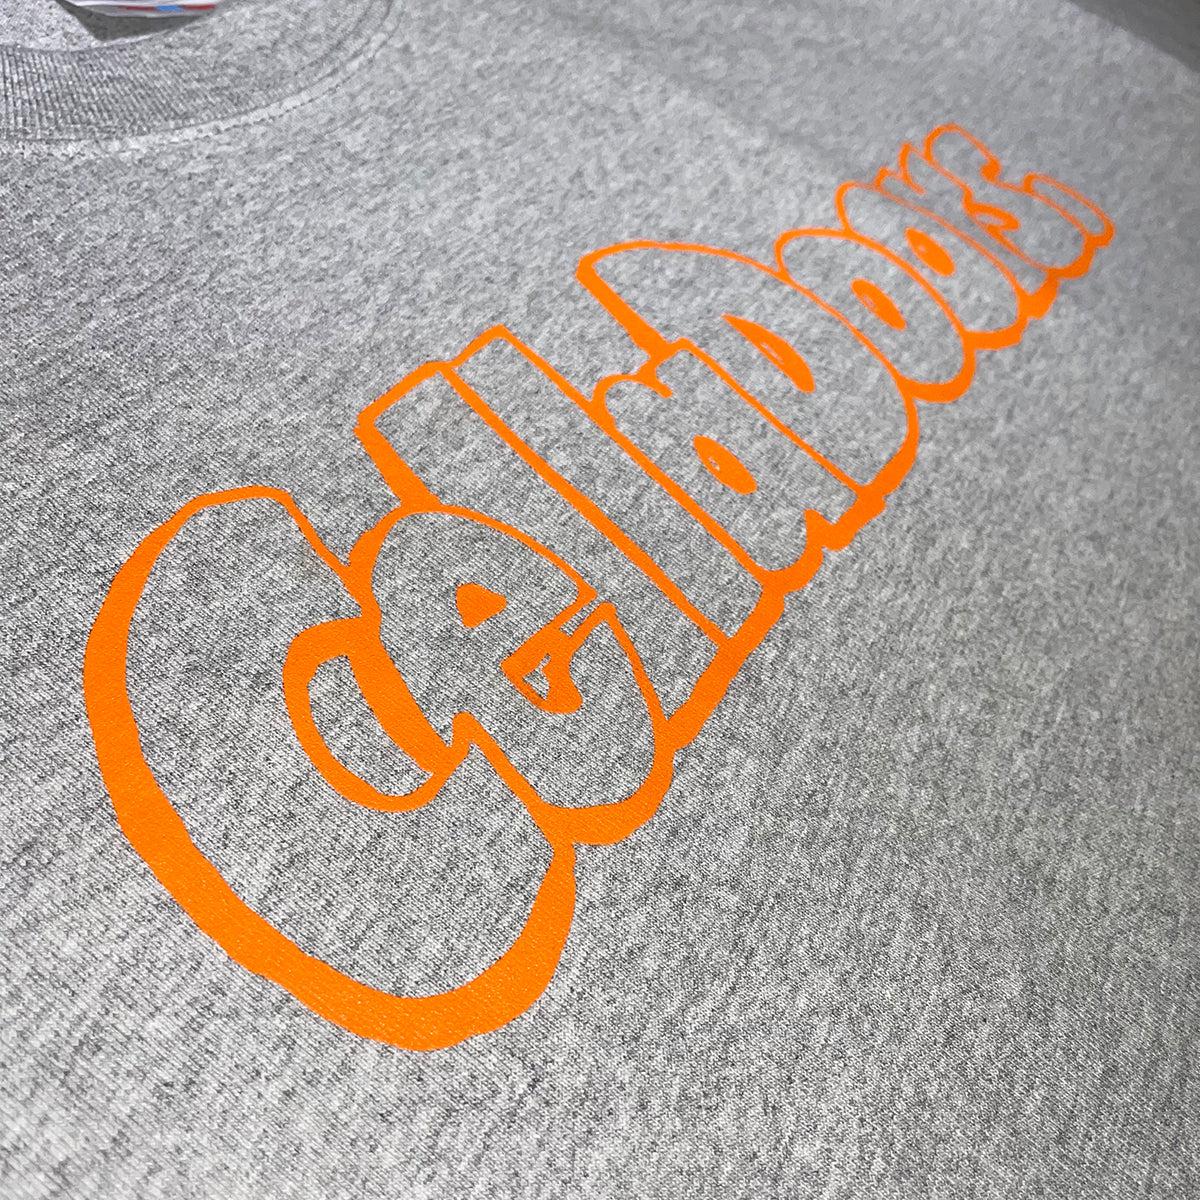 CELLADOORS - Outline T-Shirt/Grey